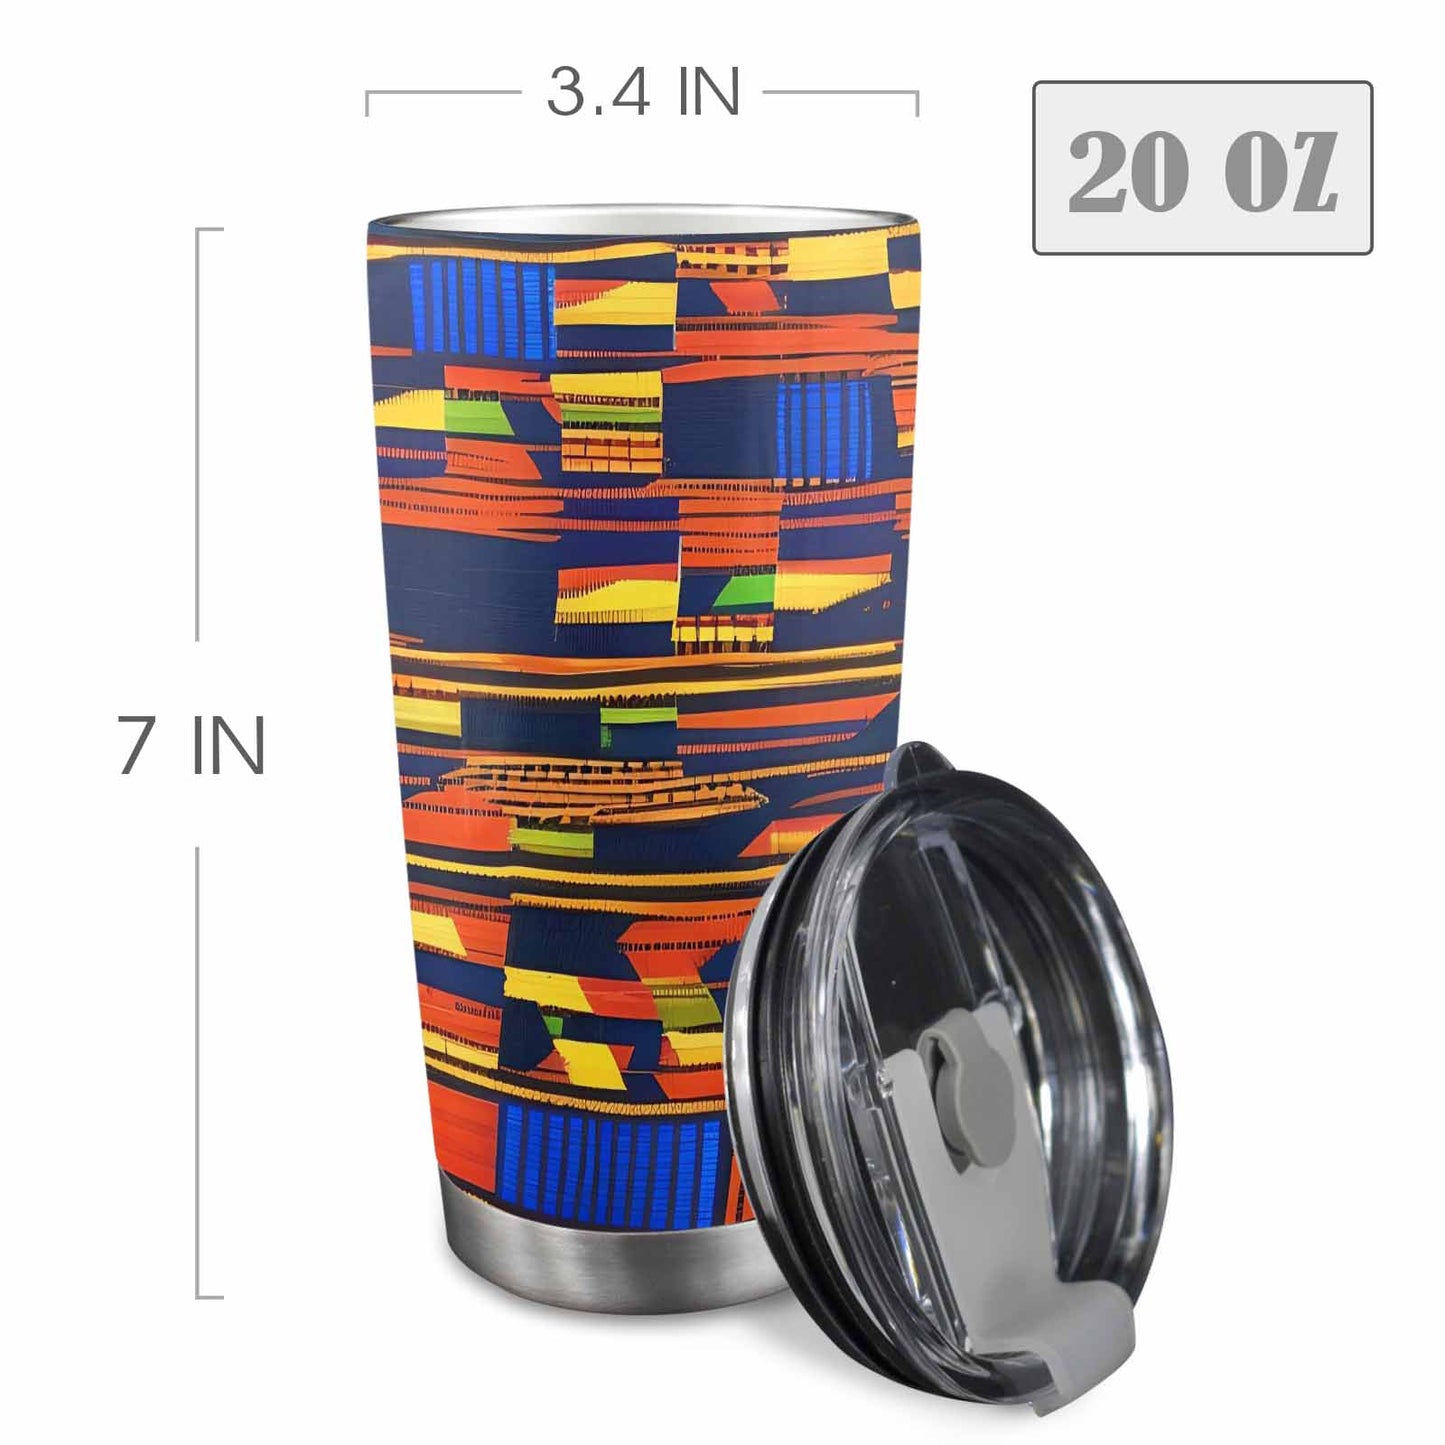 African Art, tumbler, mug, travel mug, design 08